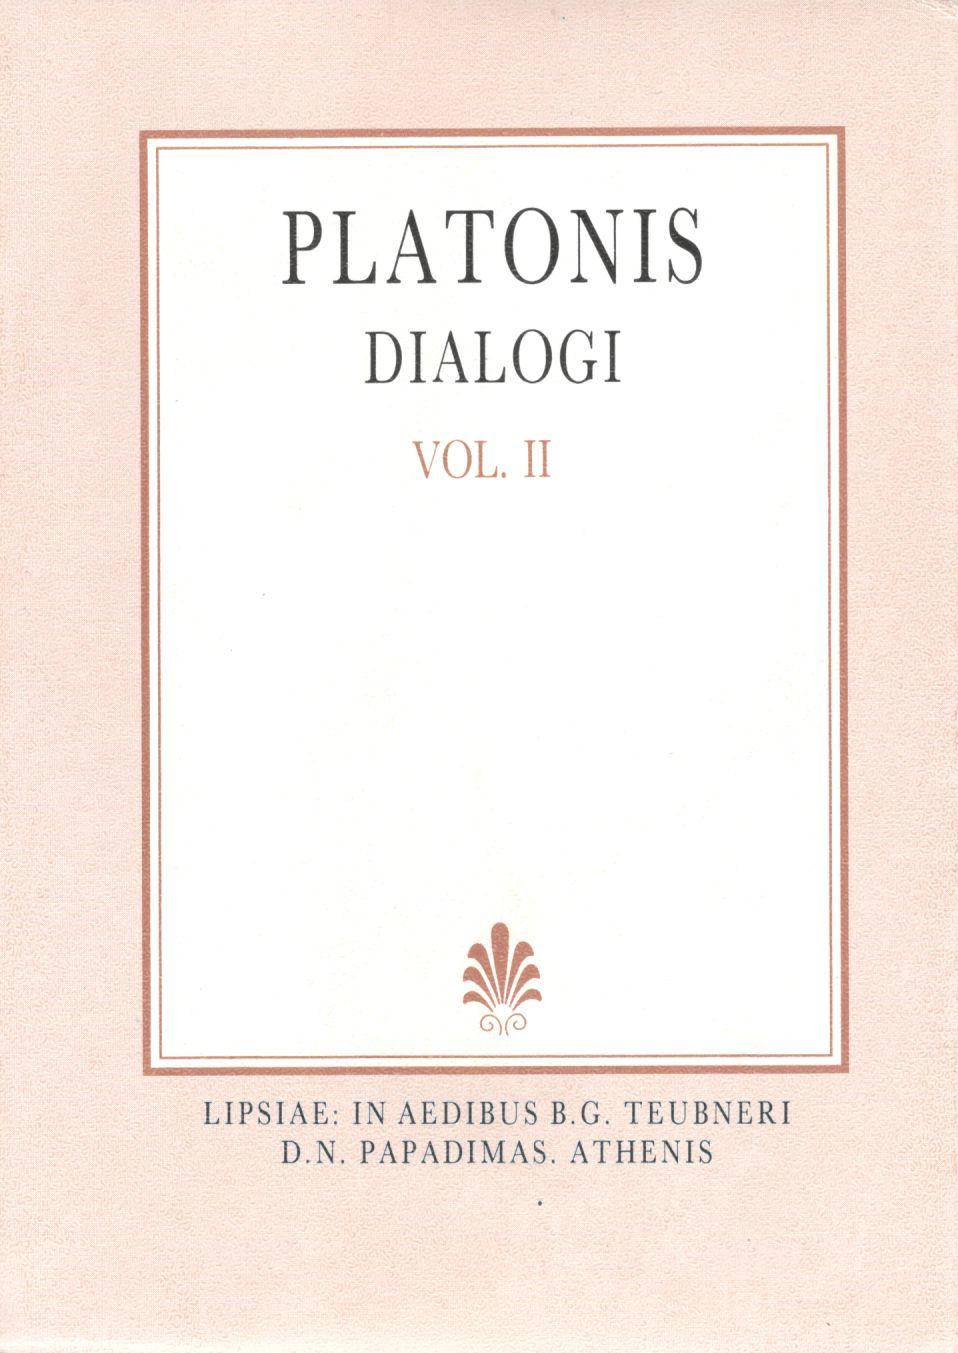 PLATONIS, DIALOGI, VOL. II, (ΠΛΑΤΩΝΟΣ, ΔΙΑΛΟΓΟΙ, Τ. Β